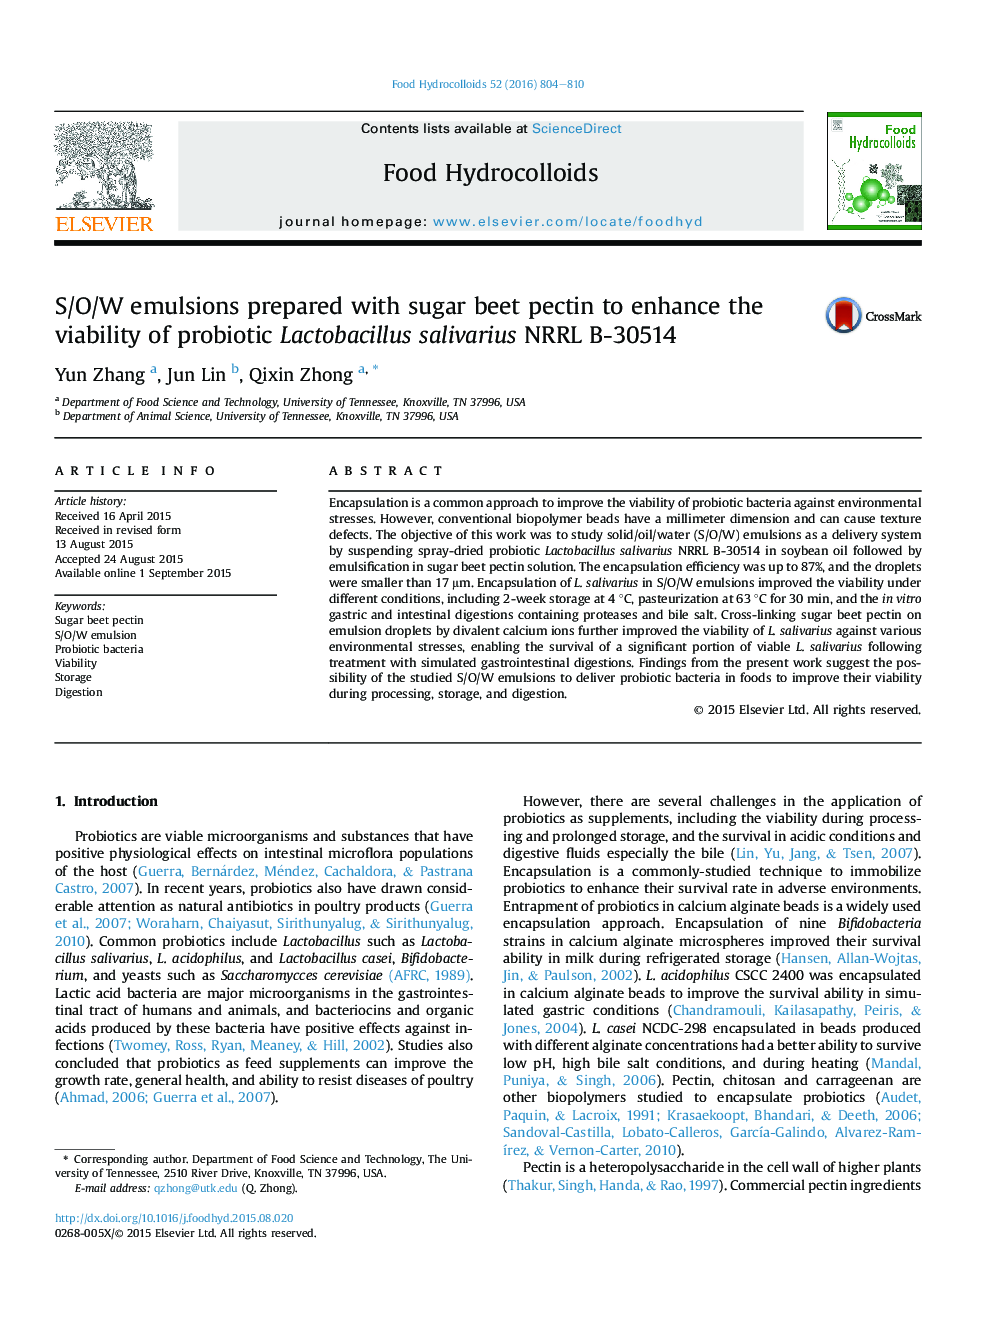 S/O/W emulsions prepared with sugar beet pectin to enhance the viability of probiotic Lactobacillus salivarius NRRL B-30514